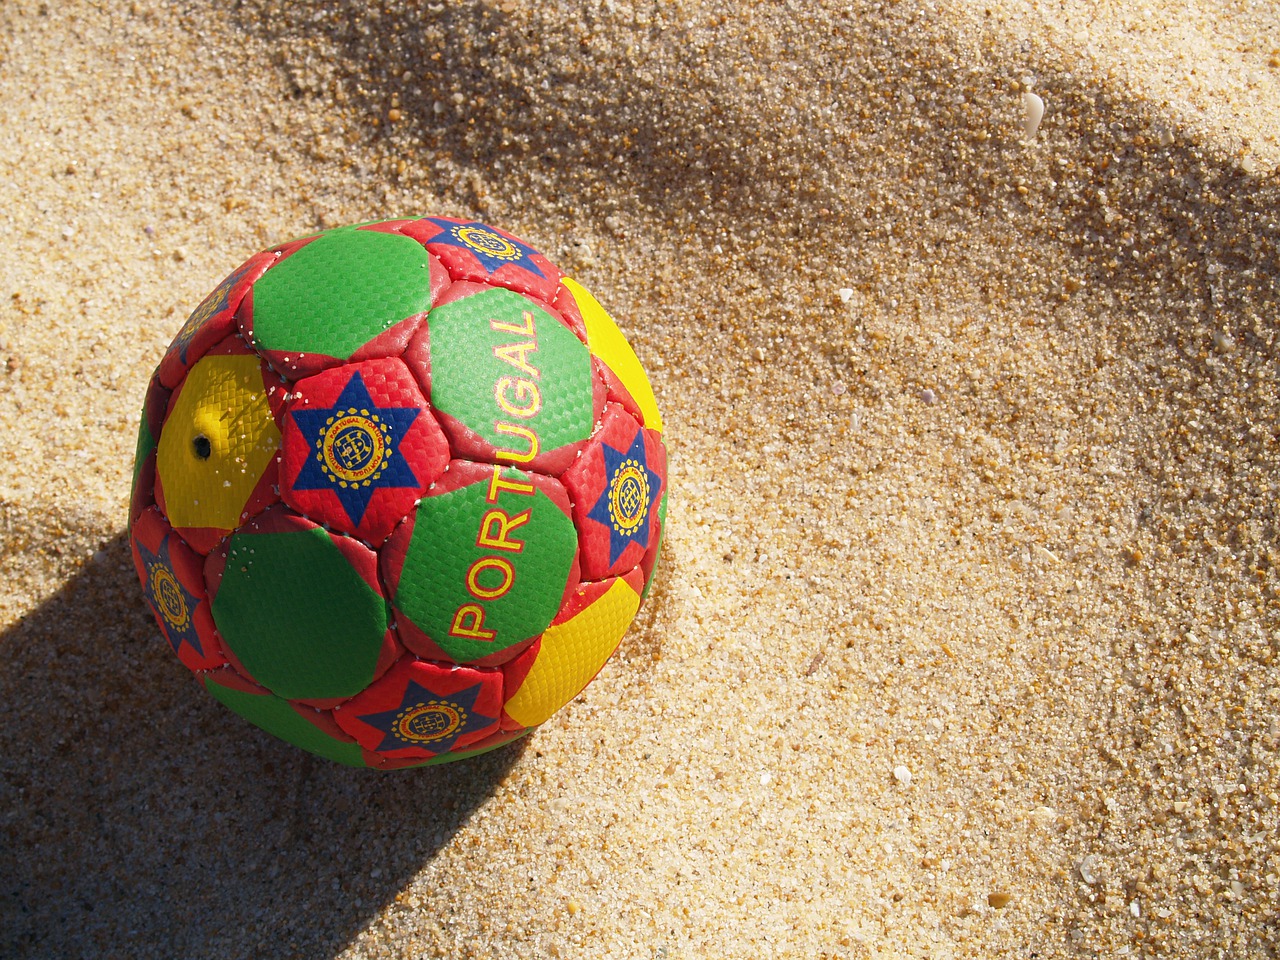 Ball, game, football, sport, play - free image from needpix.com